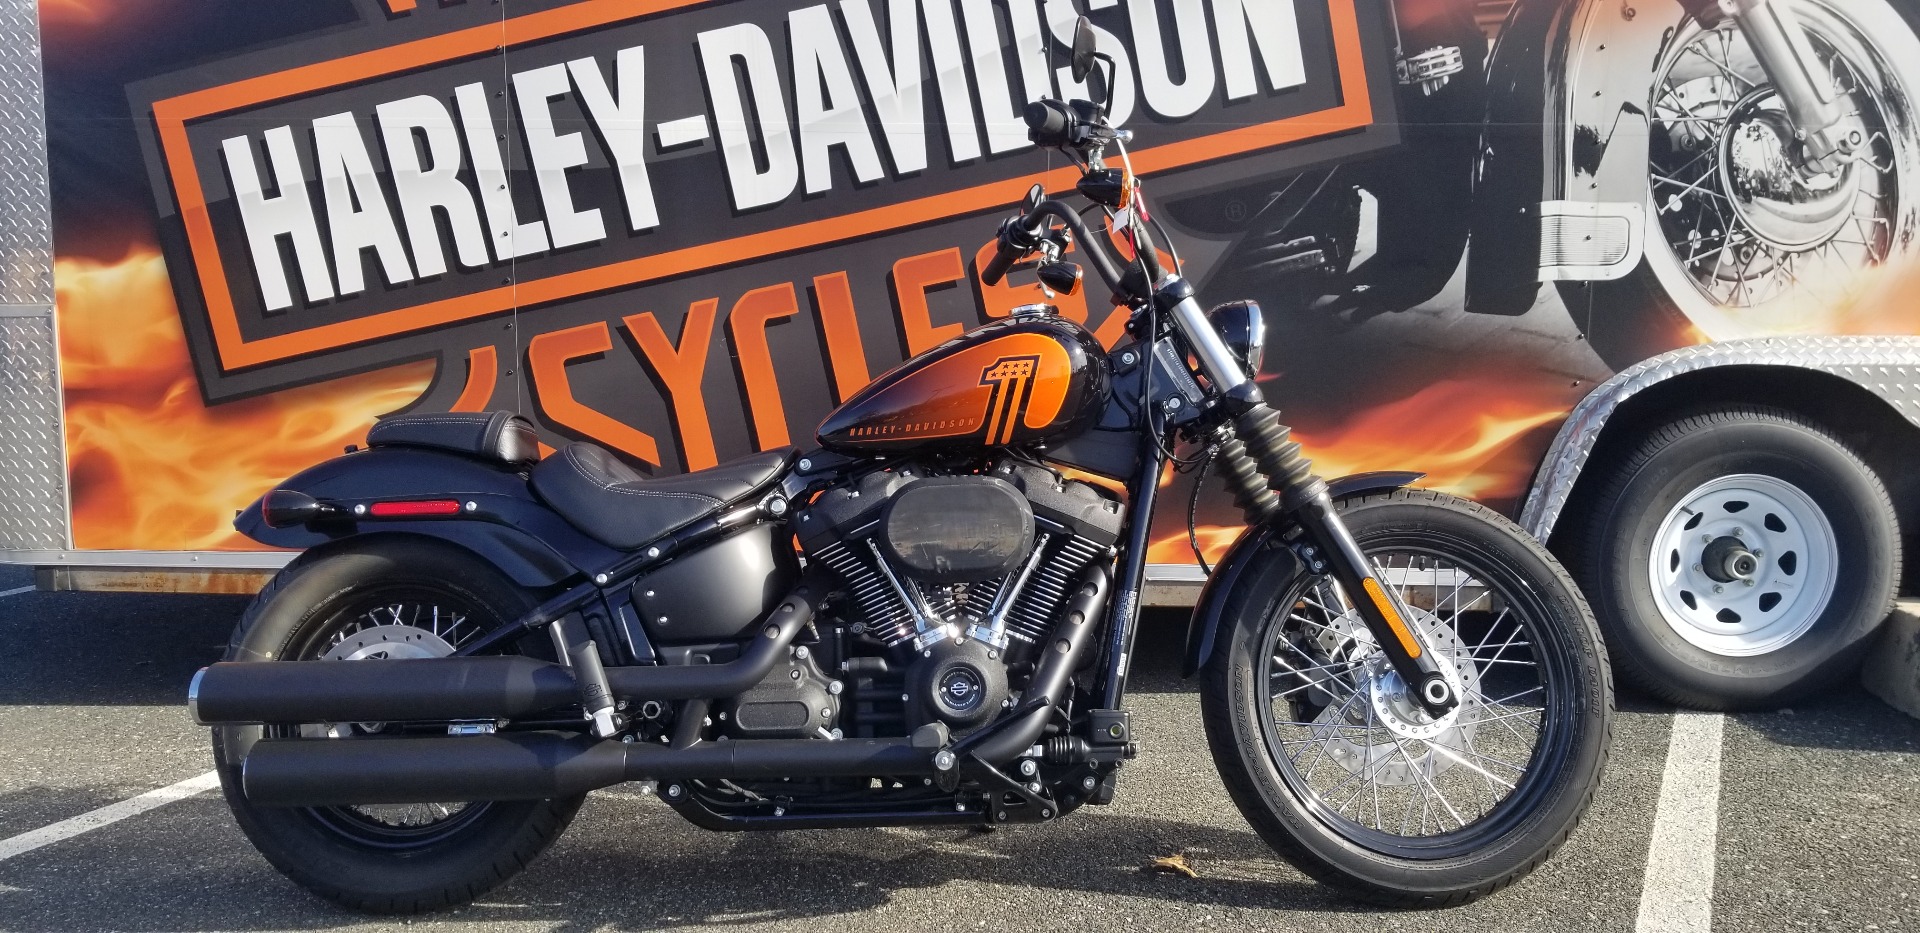 2021 Harley-Davidson Street Bob® 114 in Fredericksburg, Virginia - Photo 1